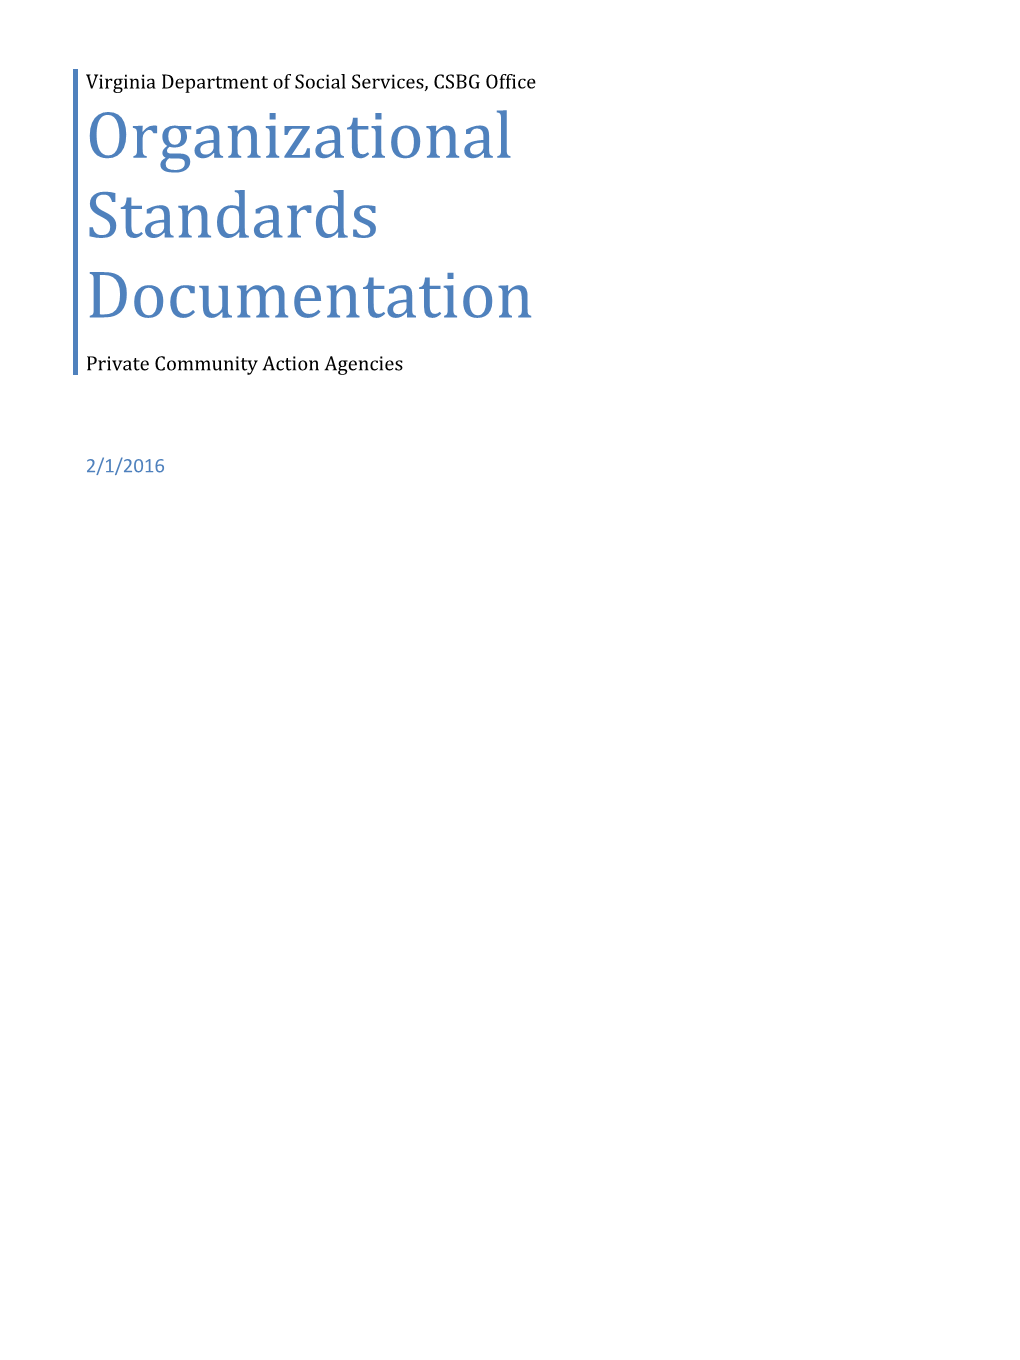 Organizational Standards Documentation